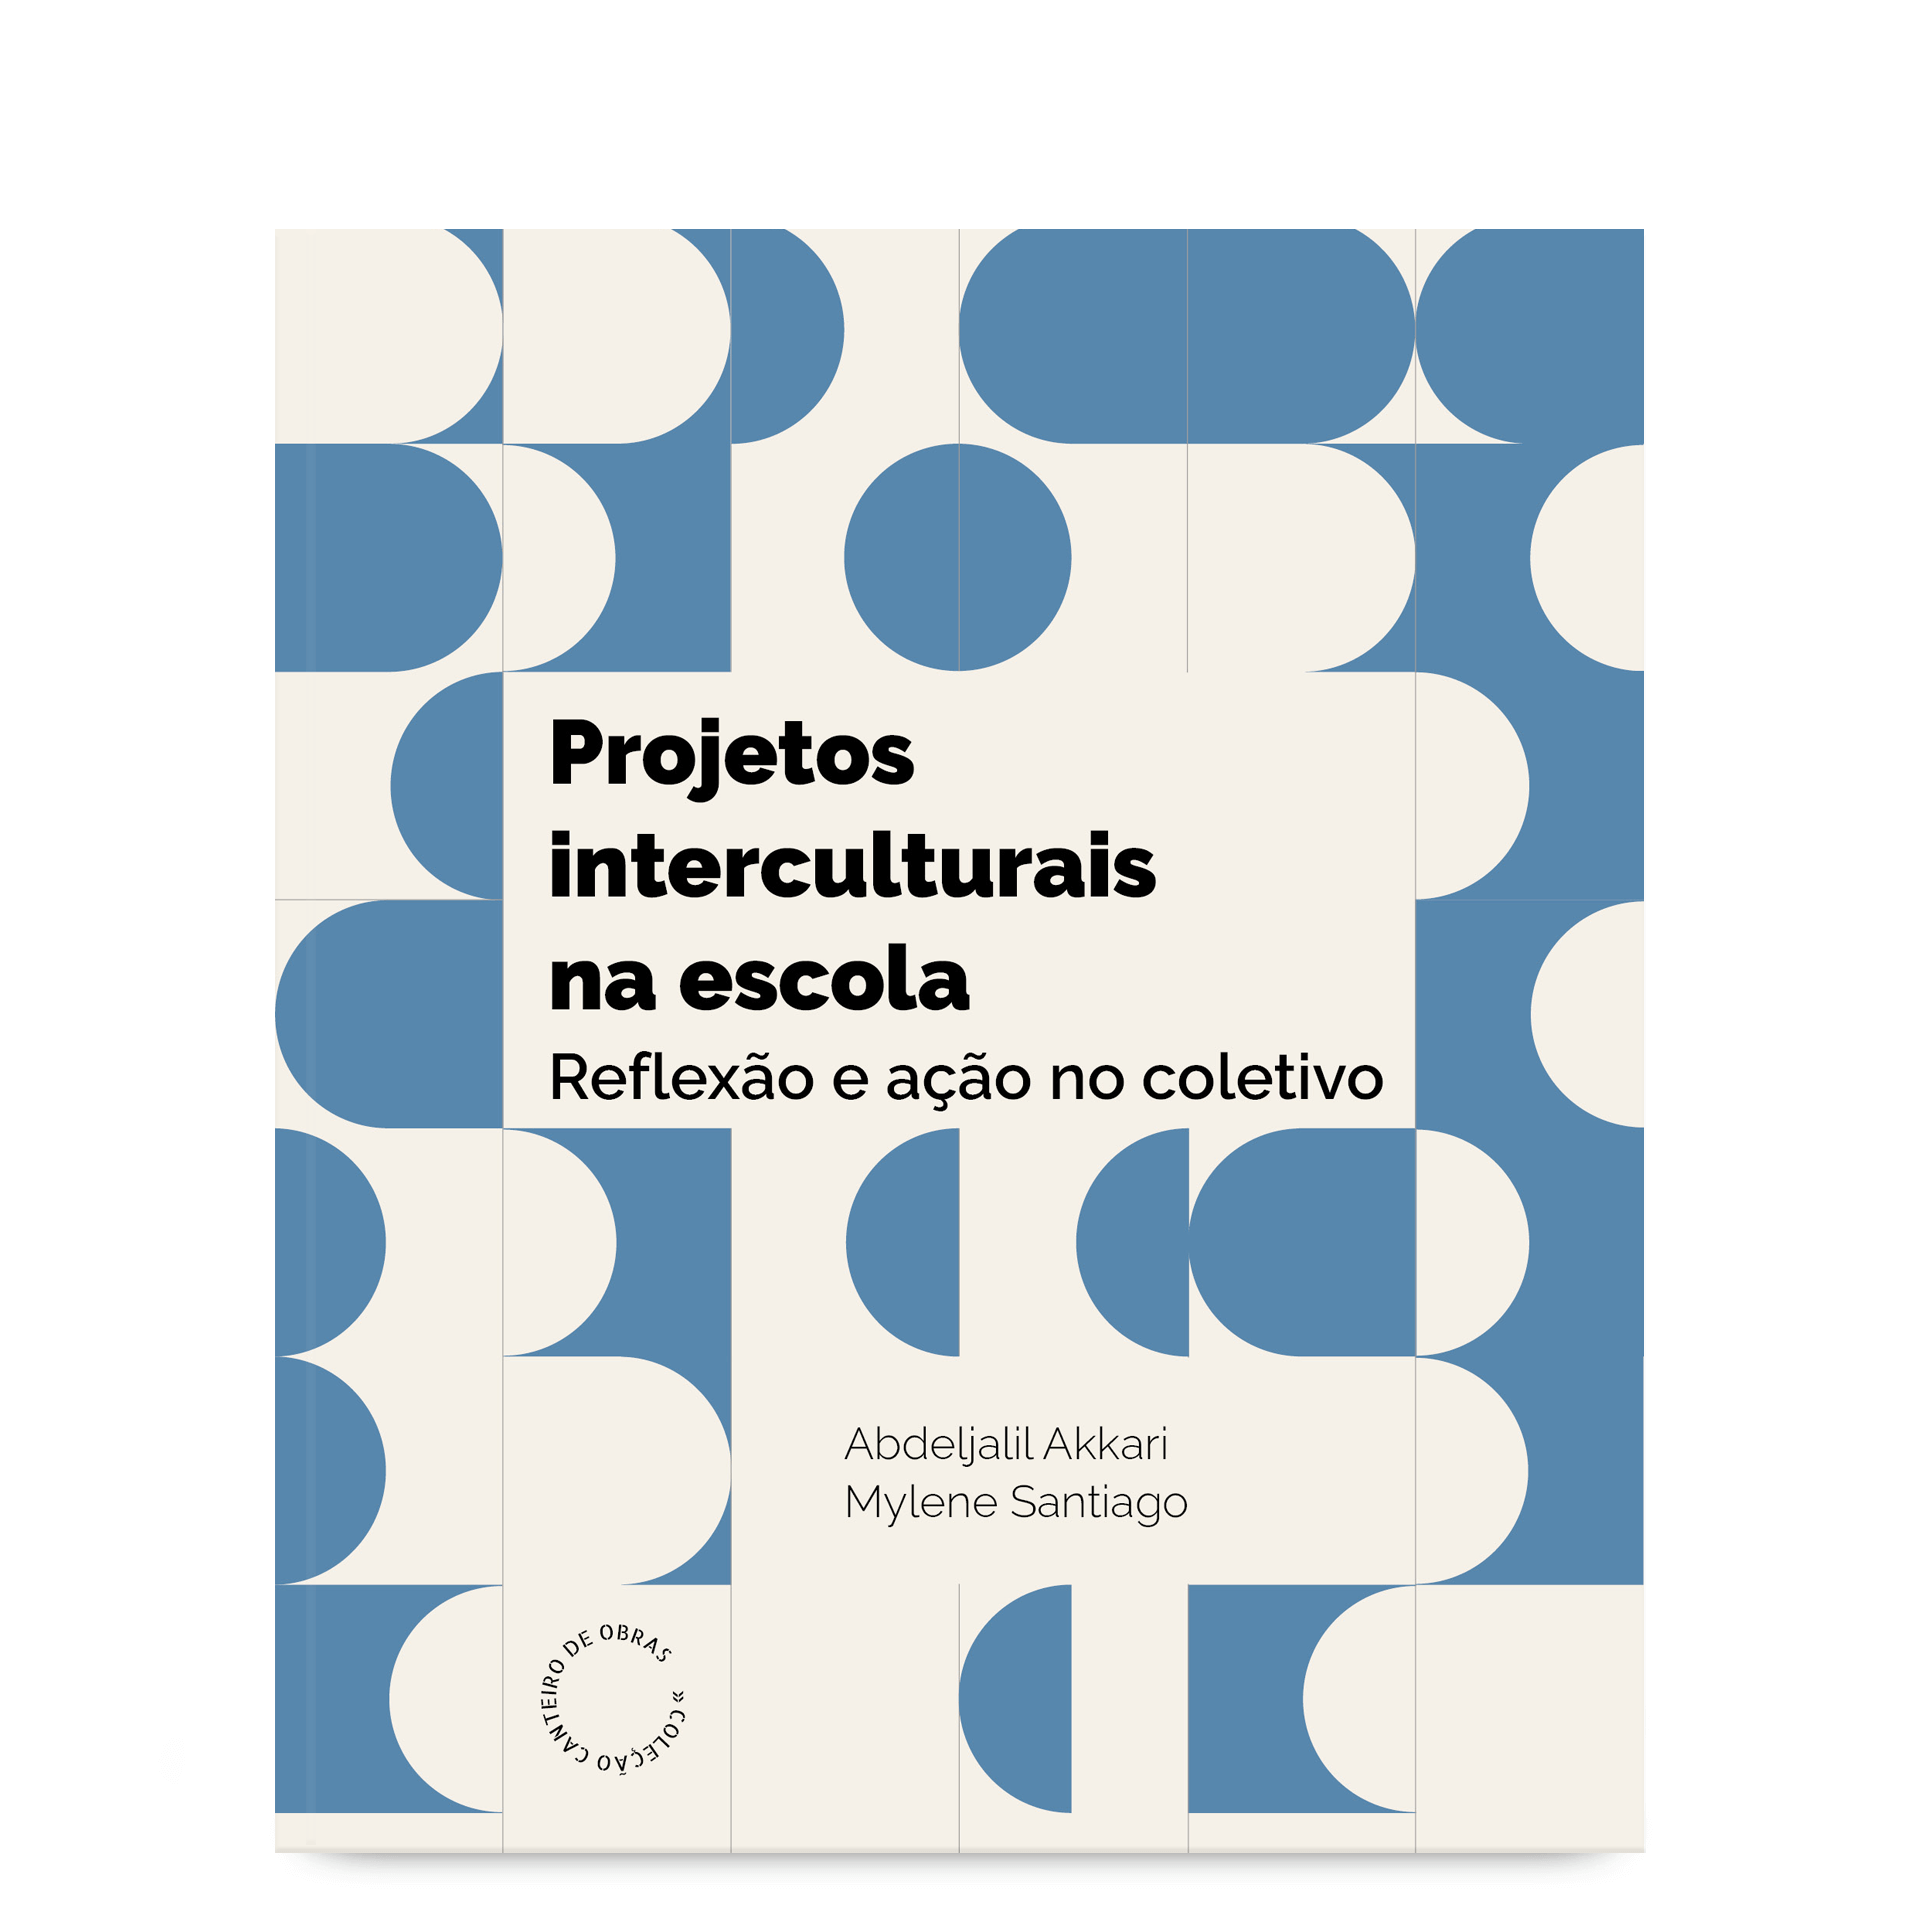 Projetos interculturais na escola